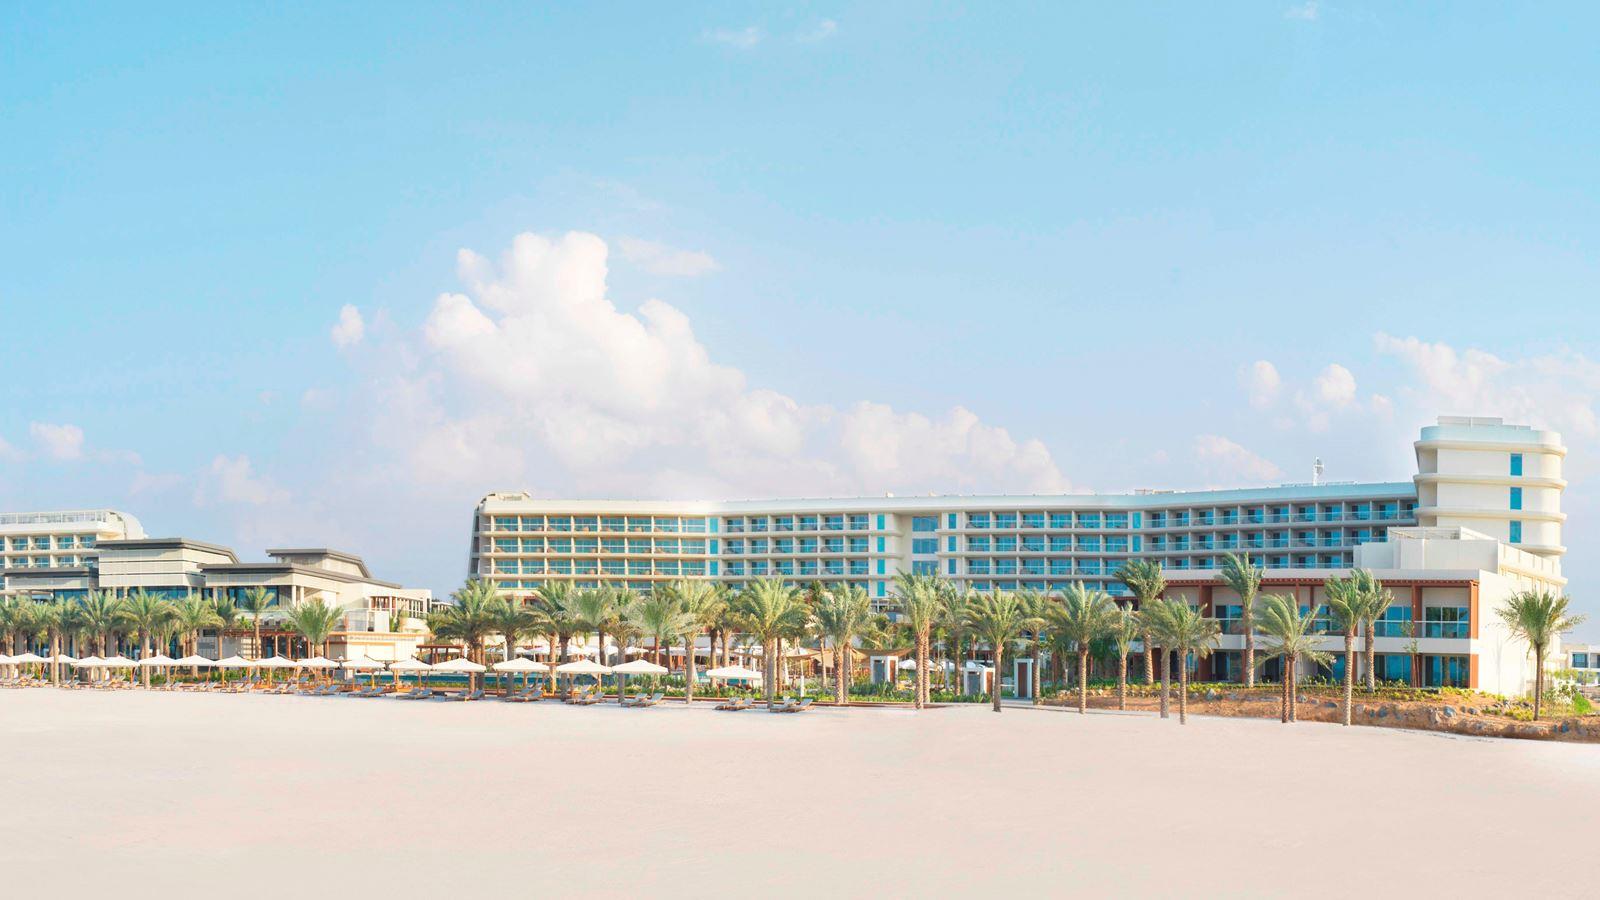 InterContinental Ras Al Khaimah Mina Al Arab Resort & Spa 5*